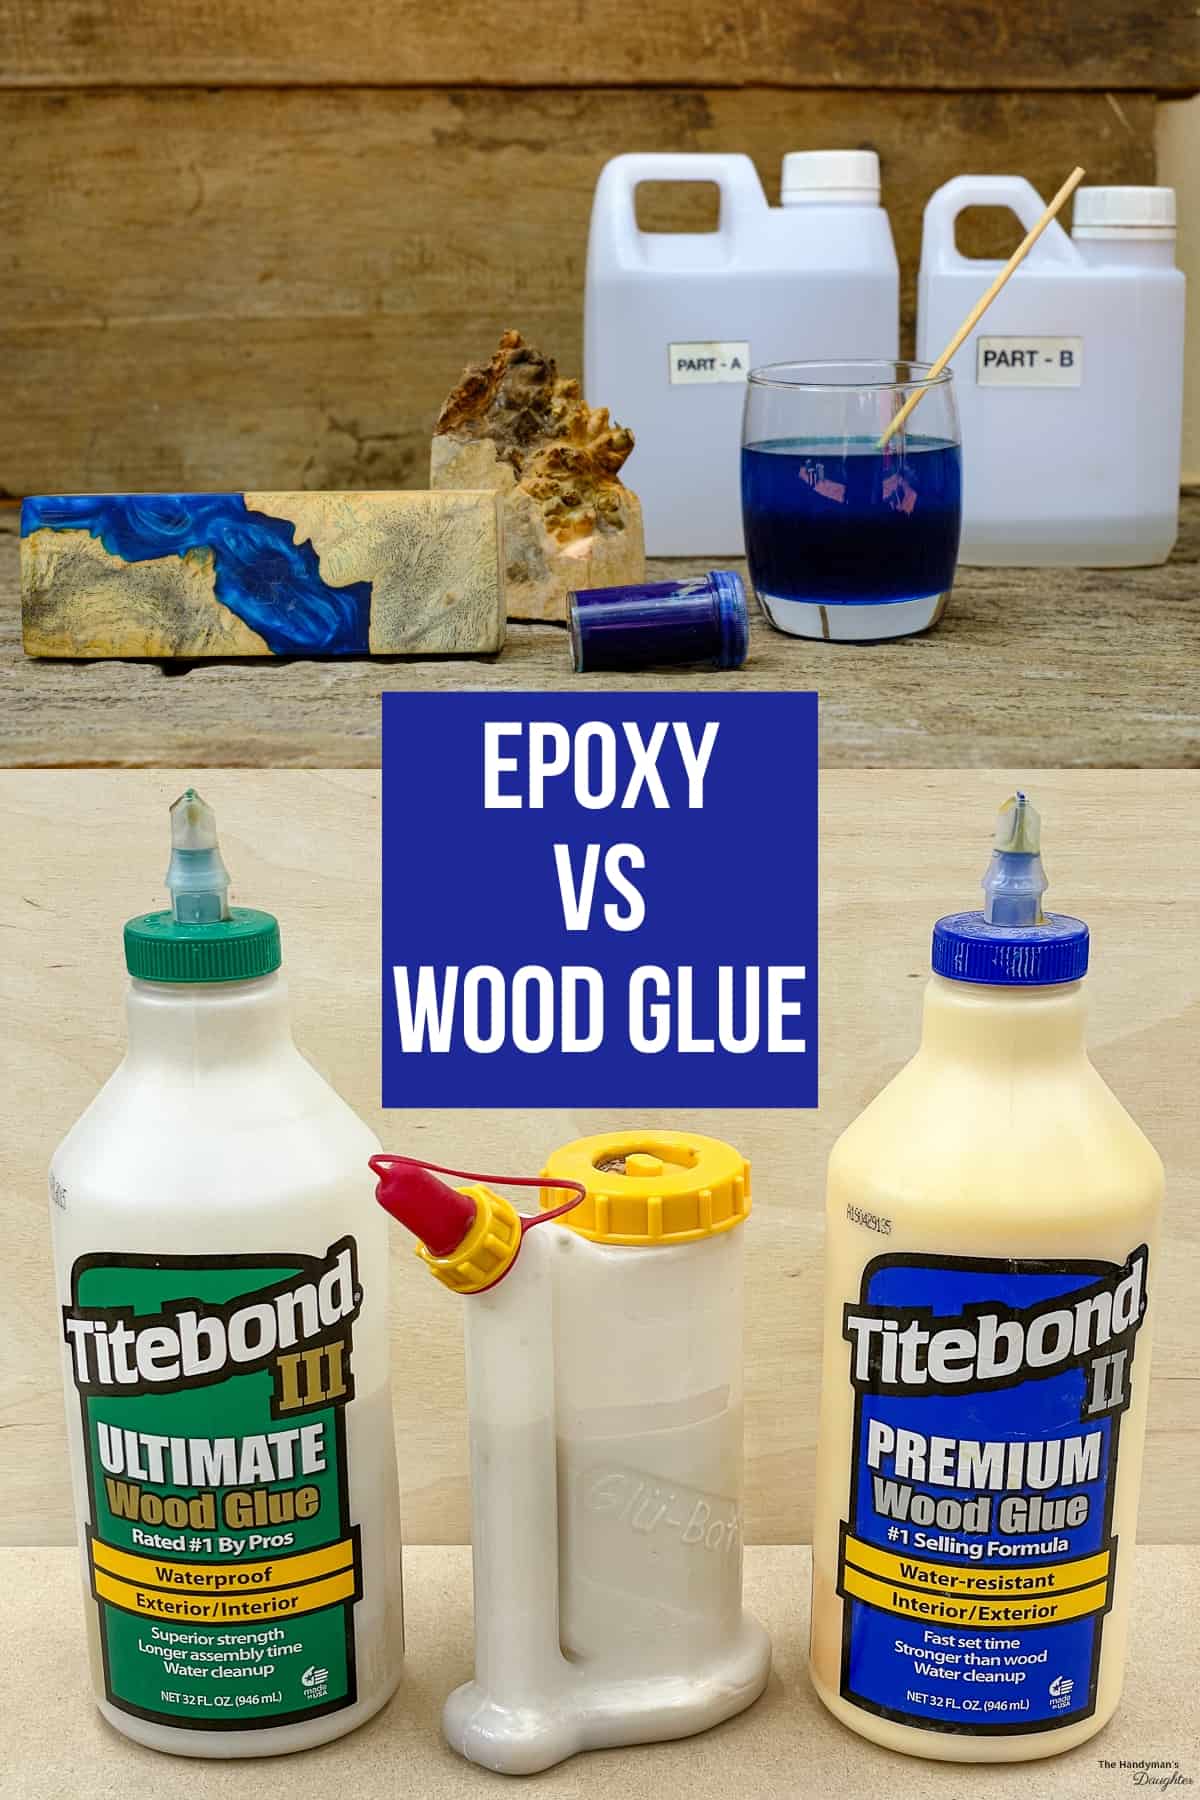 bottles of epoxy and wood glue with text overlay "epoxy vs wood glue"